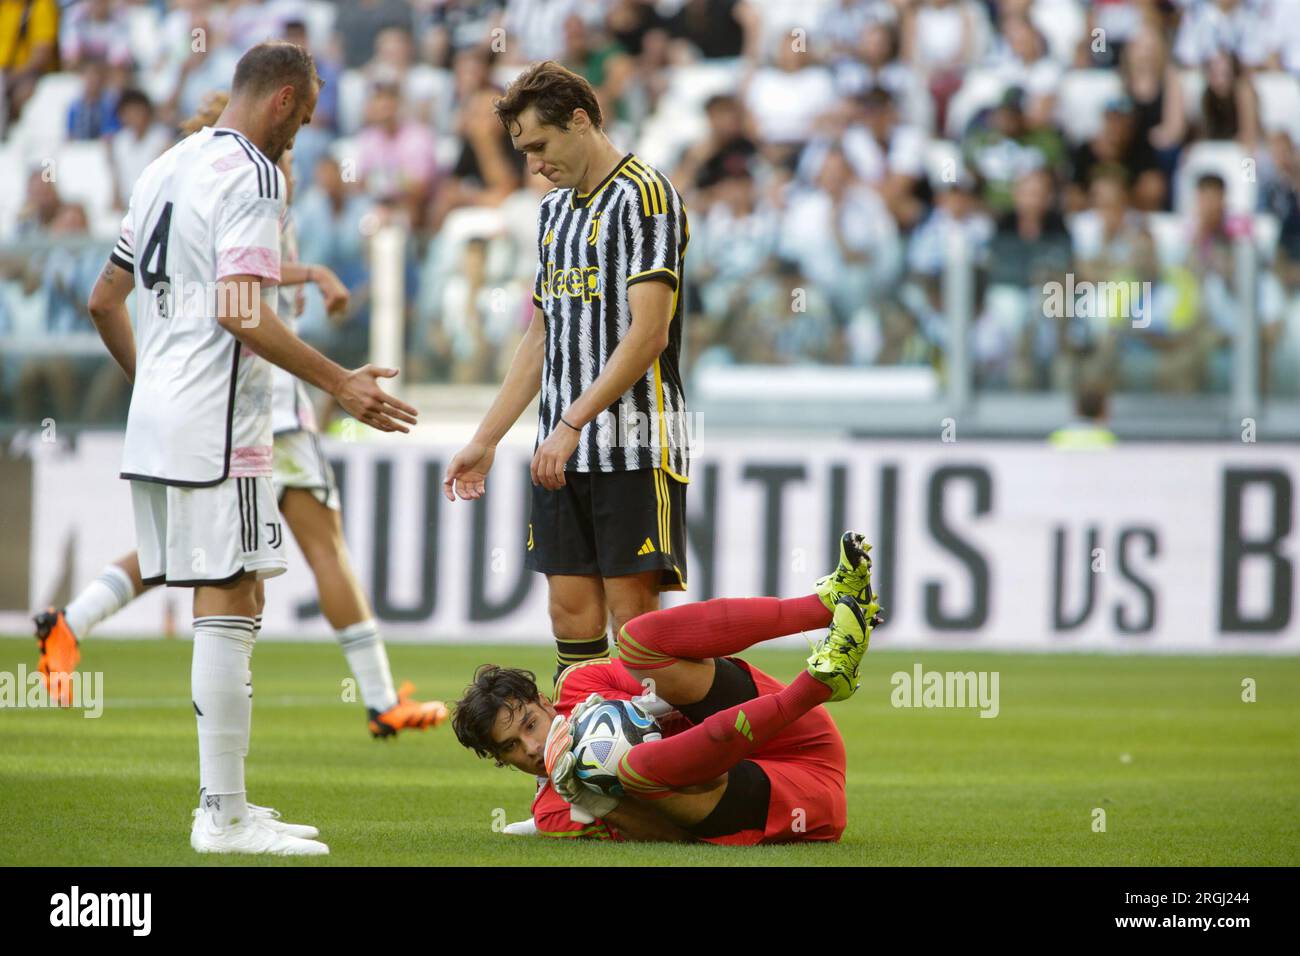 friendly football match - Juventus FC vs Juventus U23 Next Gen Federico  Chiesa of Juventus and Giova